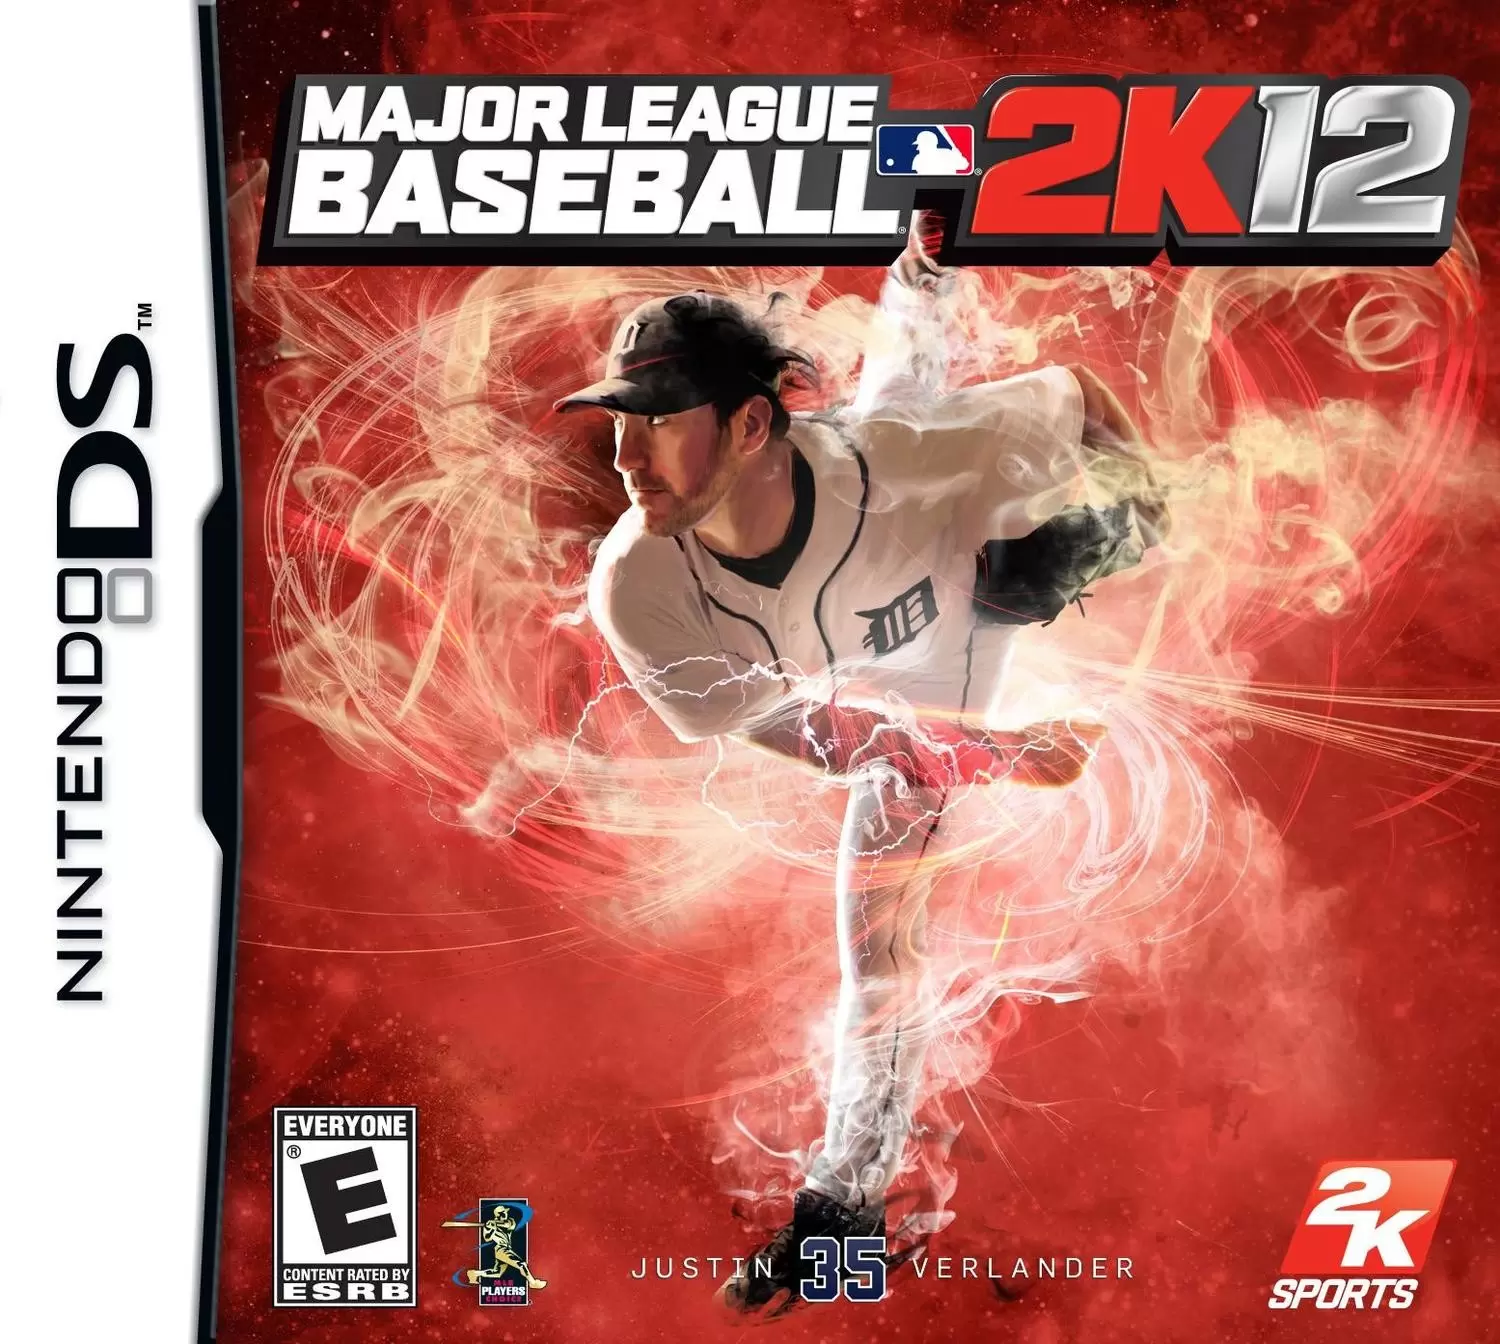 Nintendo DS Games - Major League Baseball 2K12